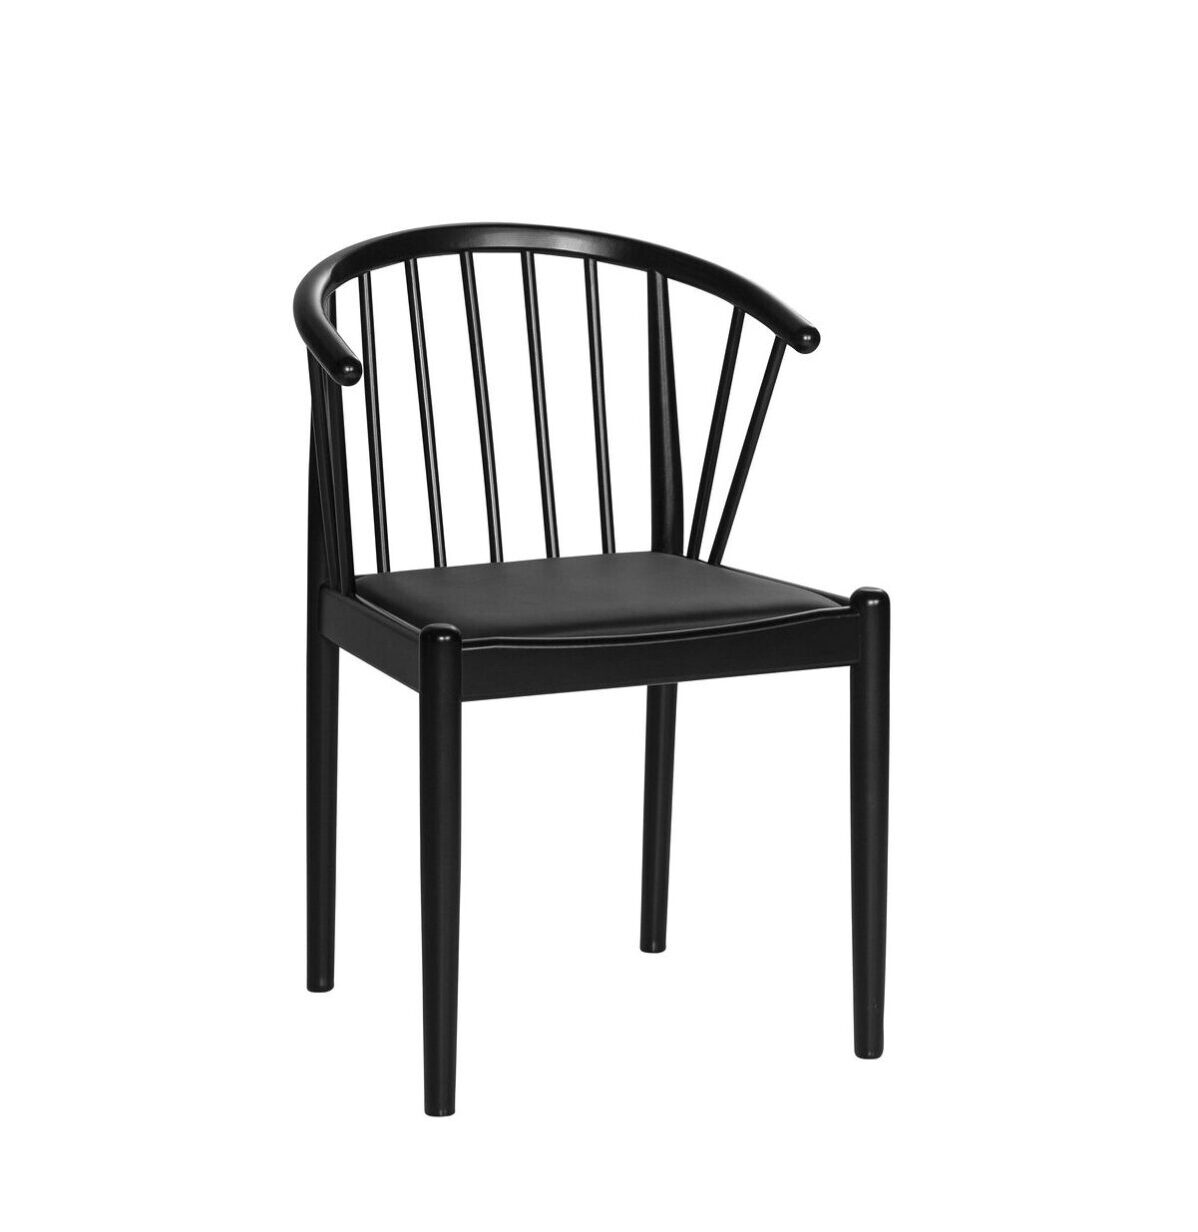 Haslev Linneberg chair